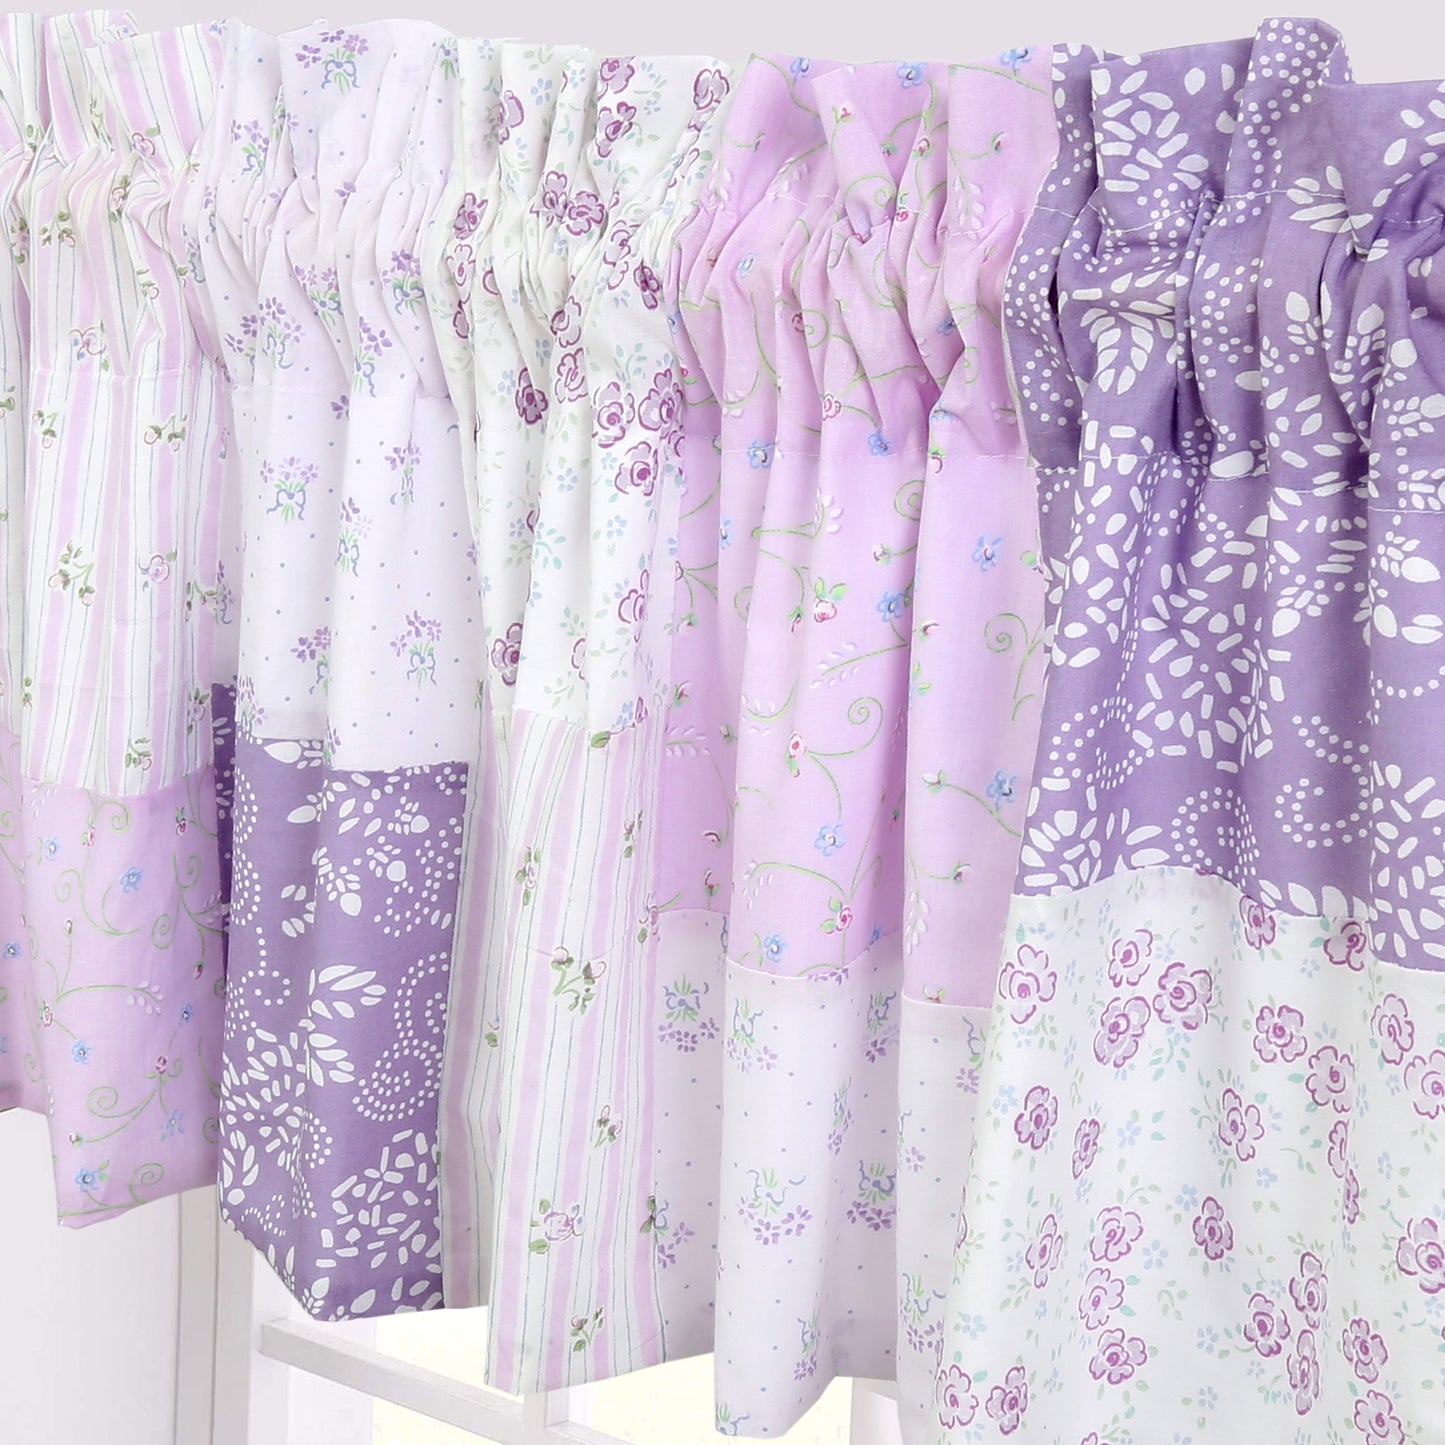 Love of Lilac Lavender Floral Real Patchwork Purple Scalloped Cotton 3-Piece Reversible Quilt Bedding Set